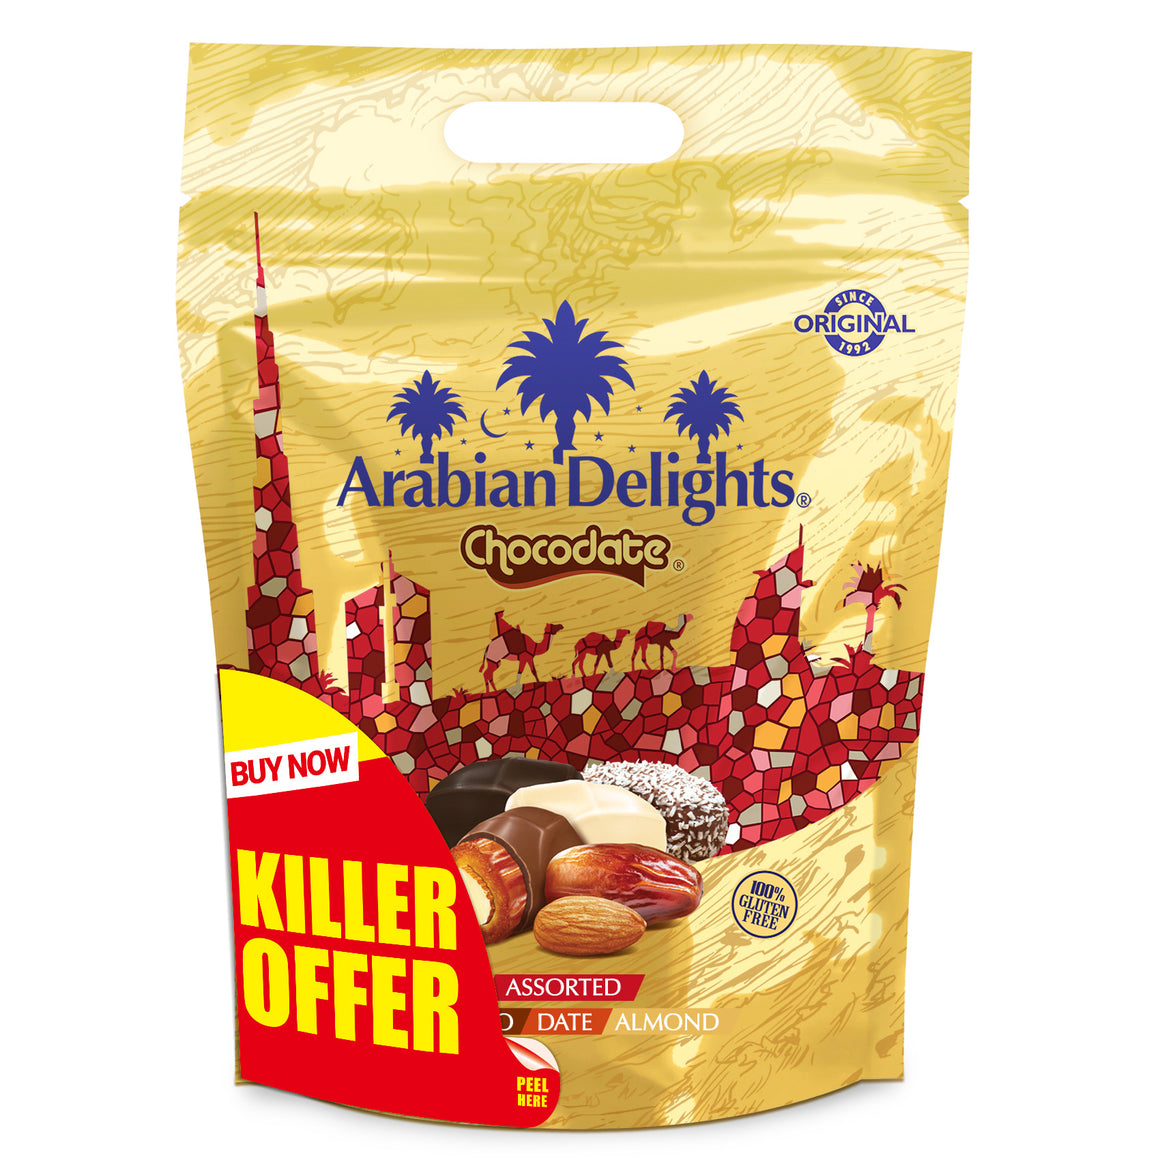 Arabian Delights Assorted Chocodate, Classic Chocolate Coated Bite-Sized Snacks, Killer offer 460gm - Promo